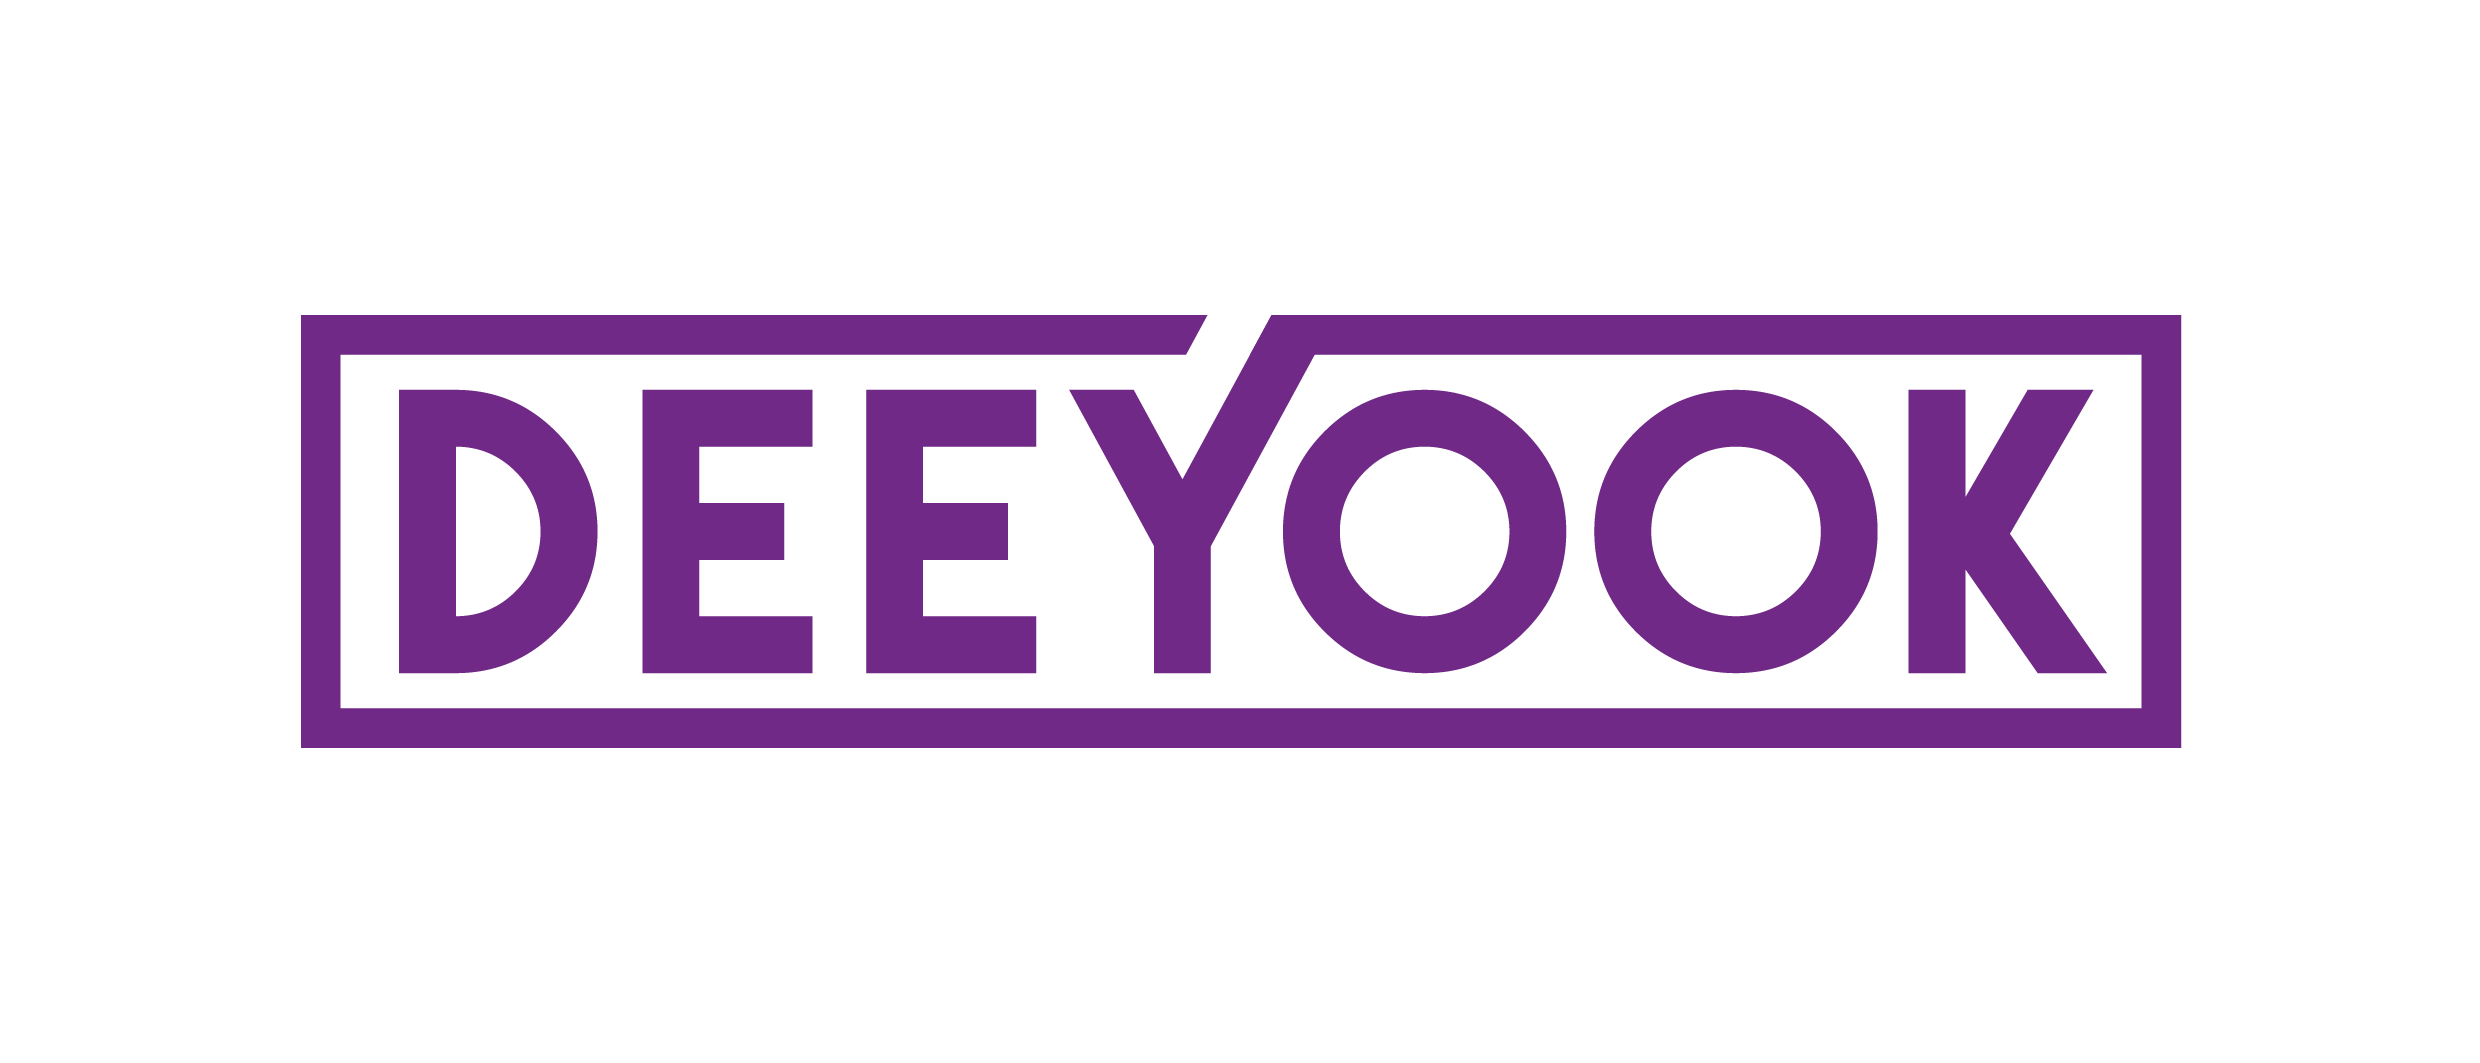 Deeyook Location Technologies logo